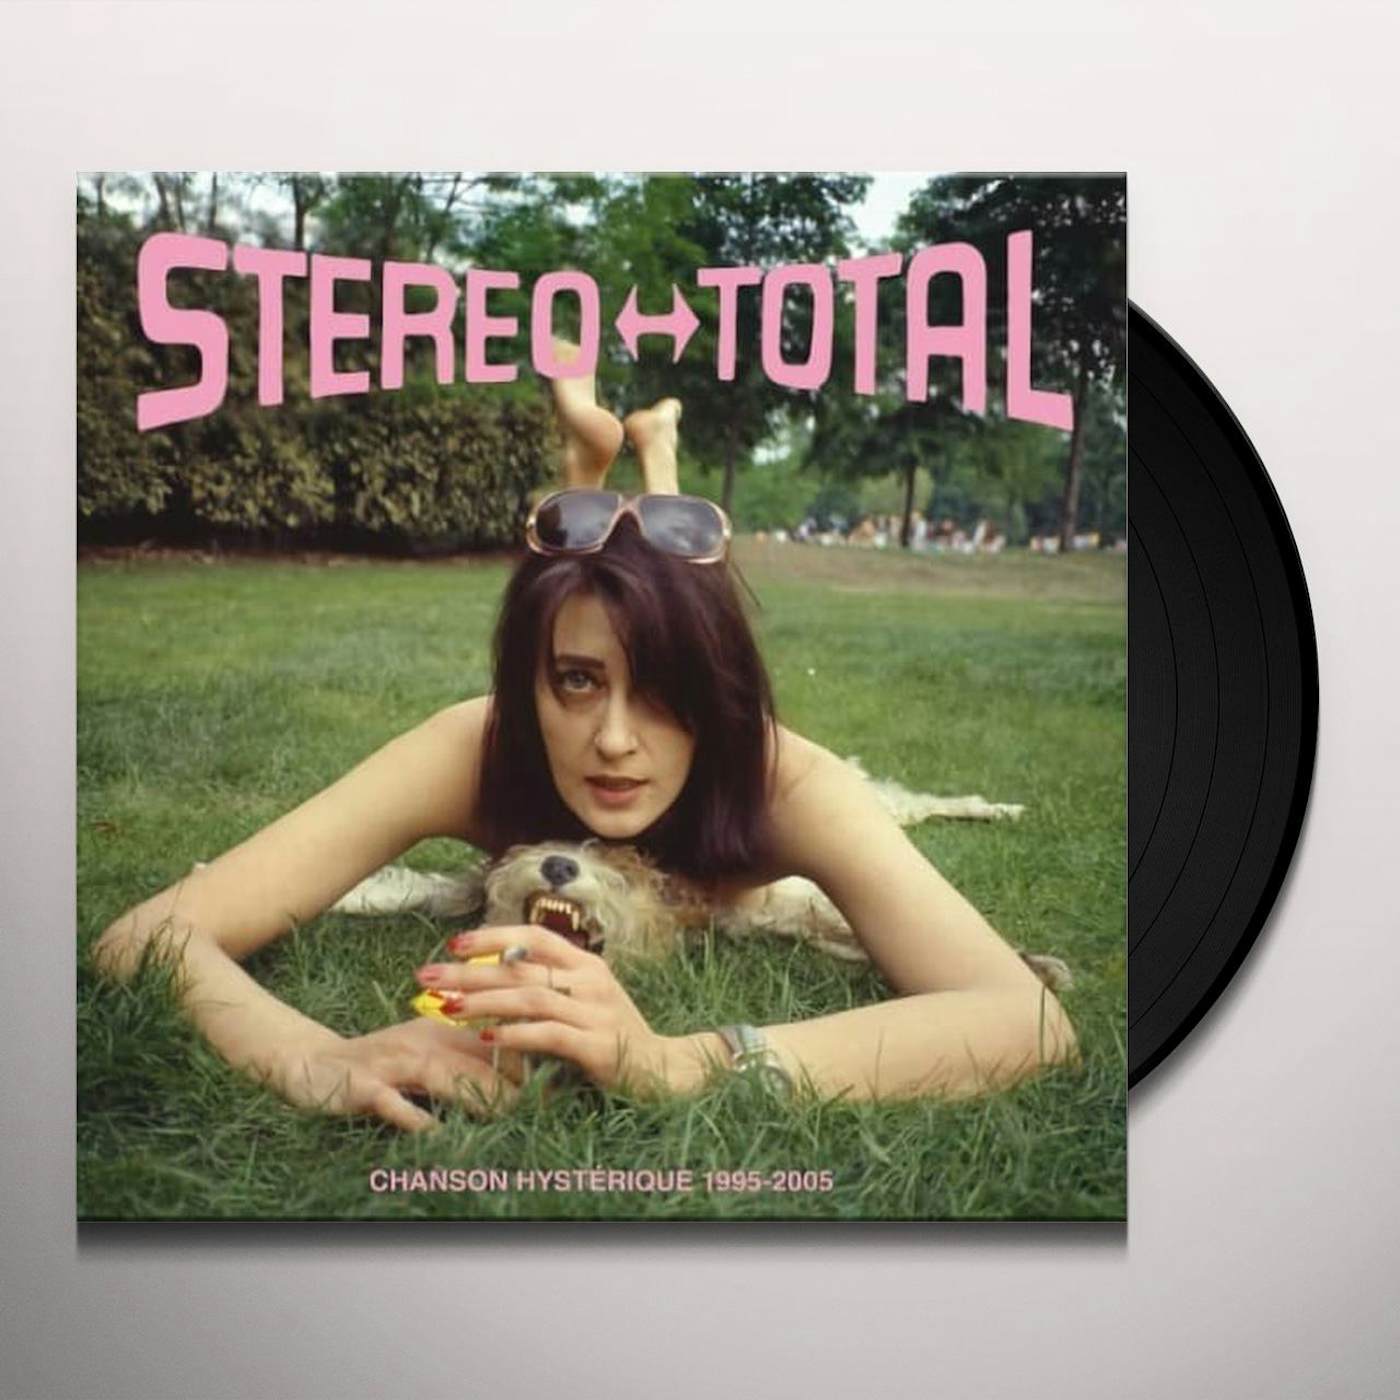 Stereo Total CHANSON HYSTERIQUE (1995-2005) Vinyl Record